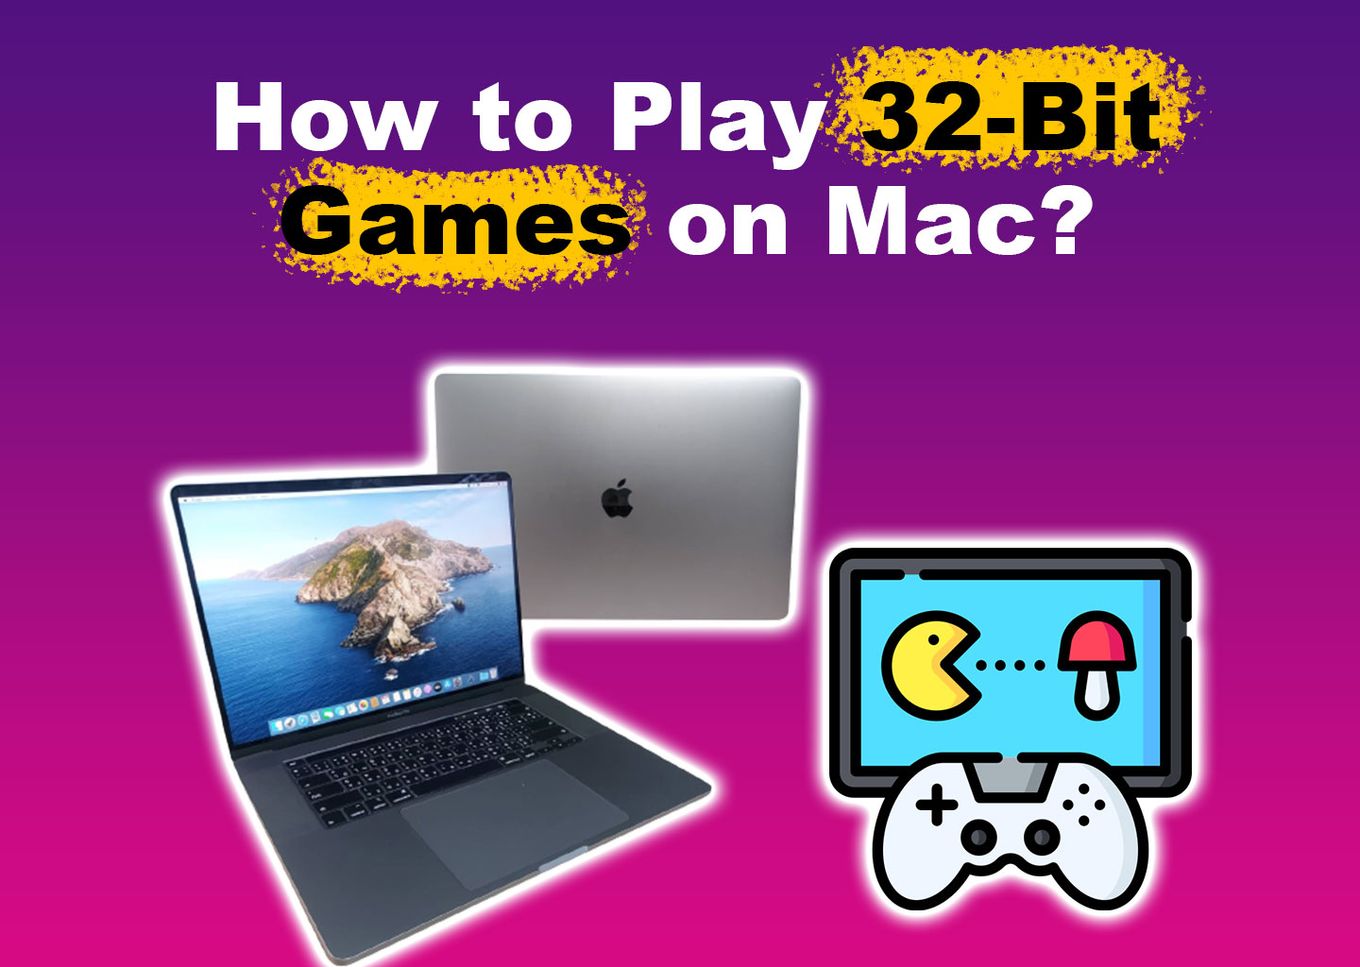 Mac games free to public